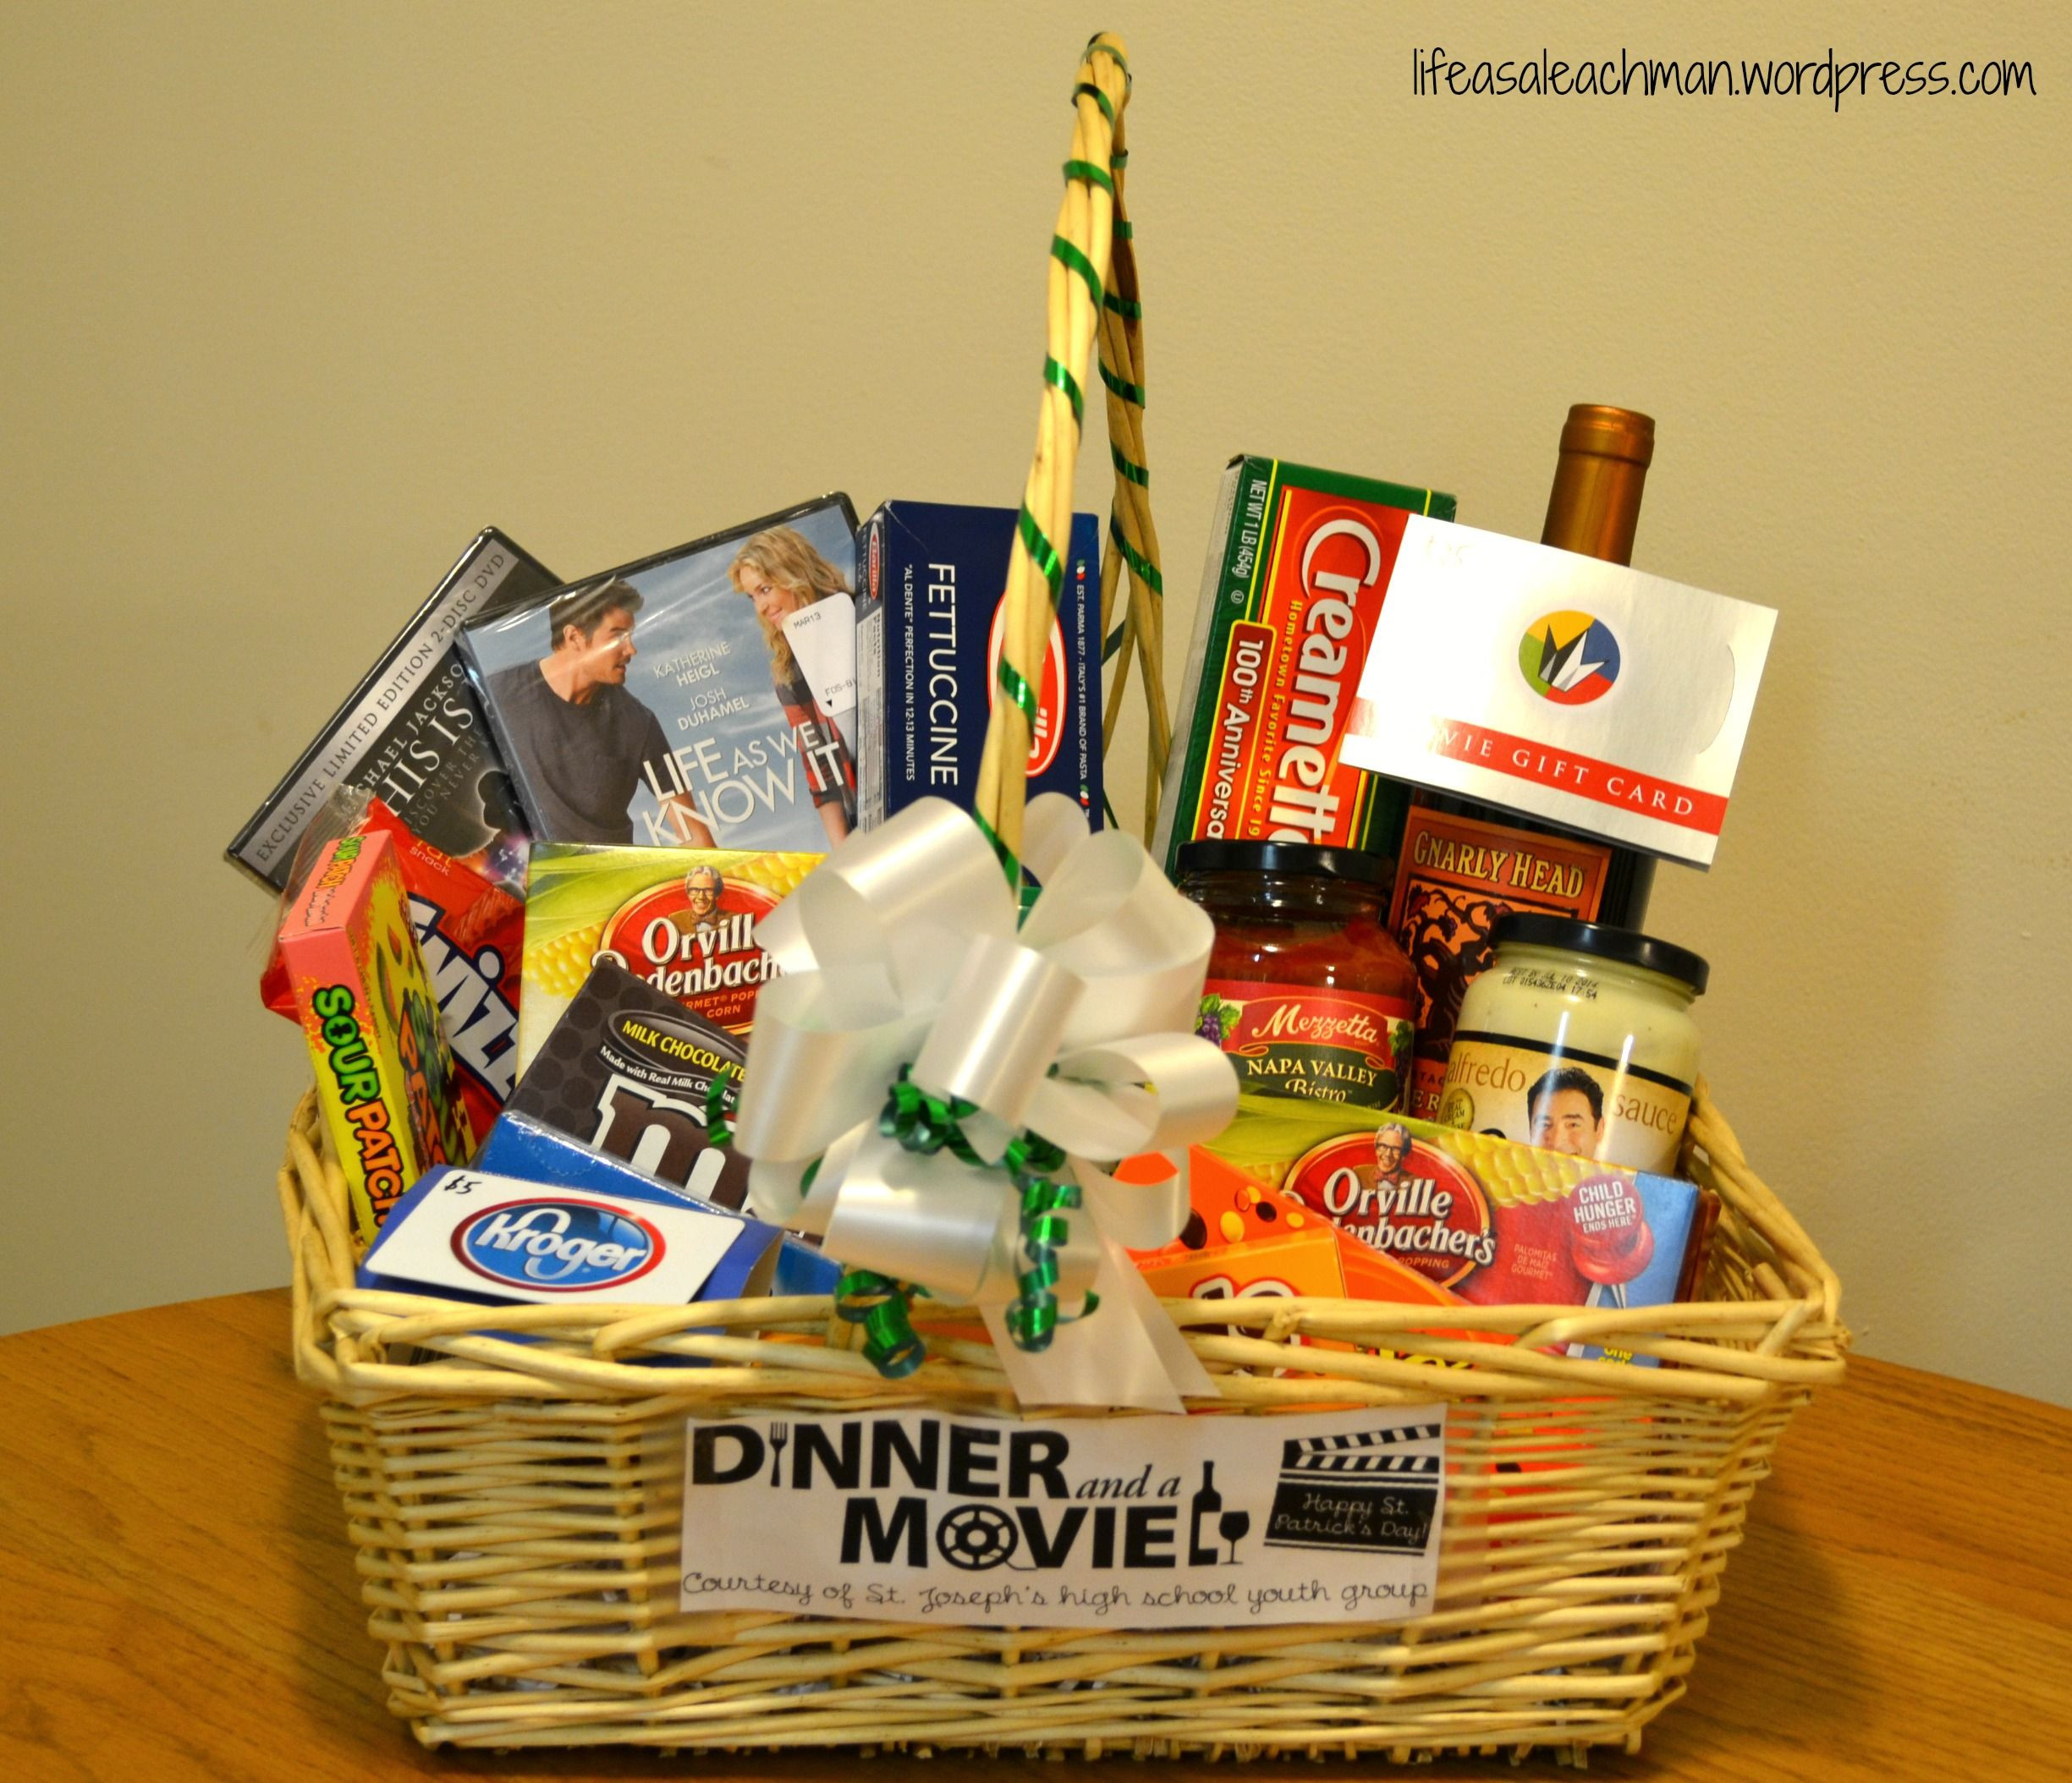 Movie Theater Gift Basket Ideas
 ‘Dinner & a Movie’ t basket